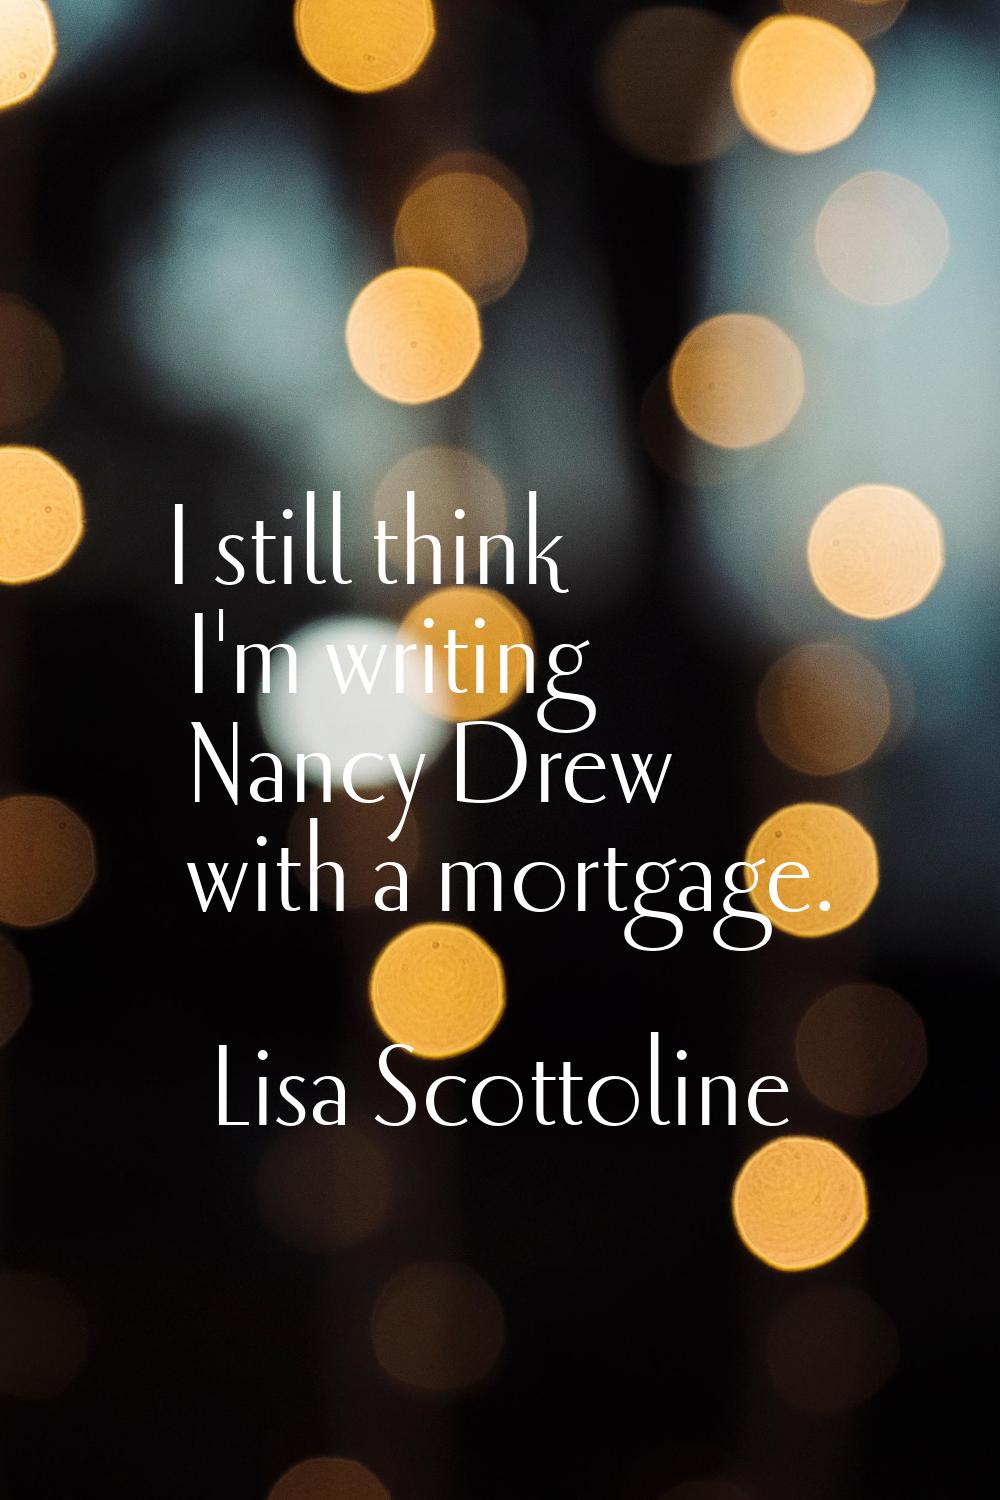 I still think I'm writing Nancy Drew with a mortgage.